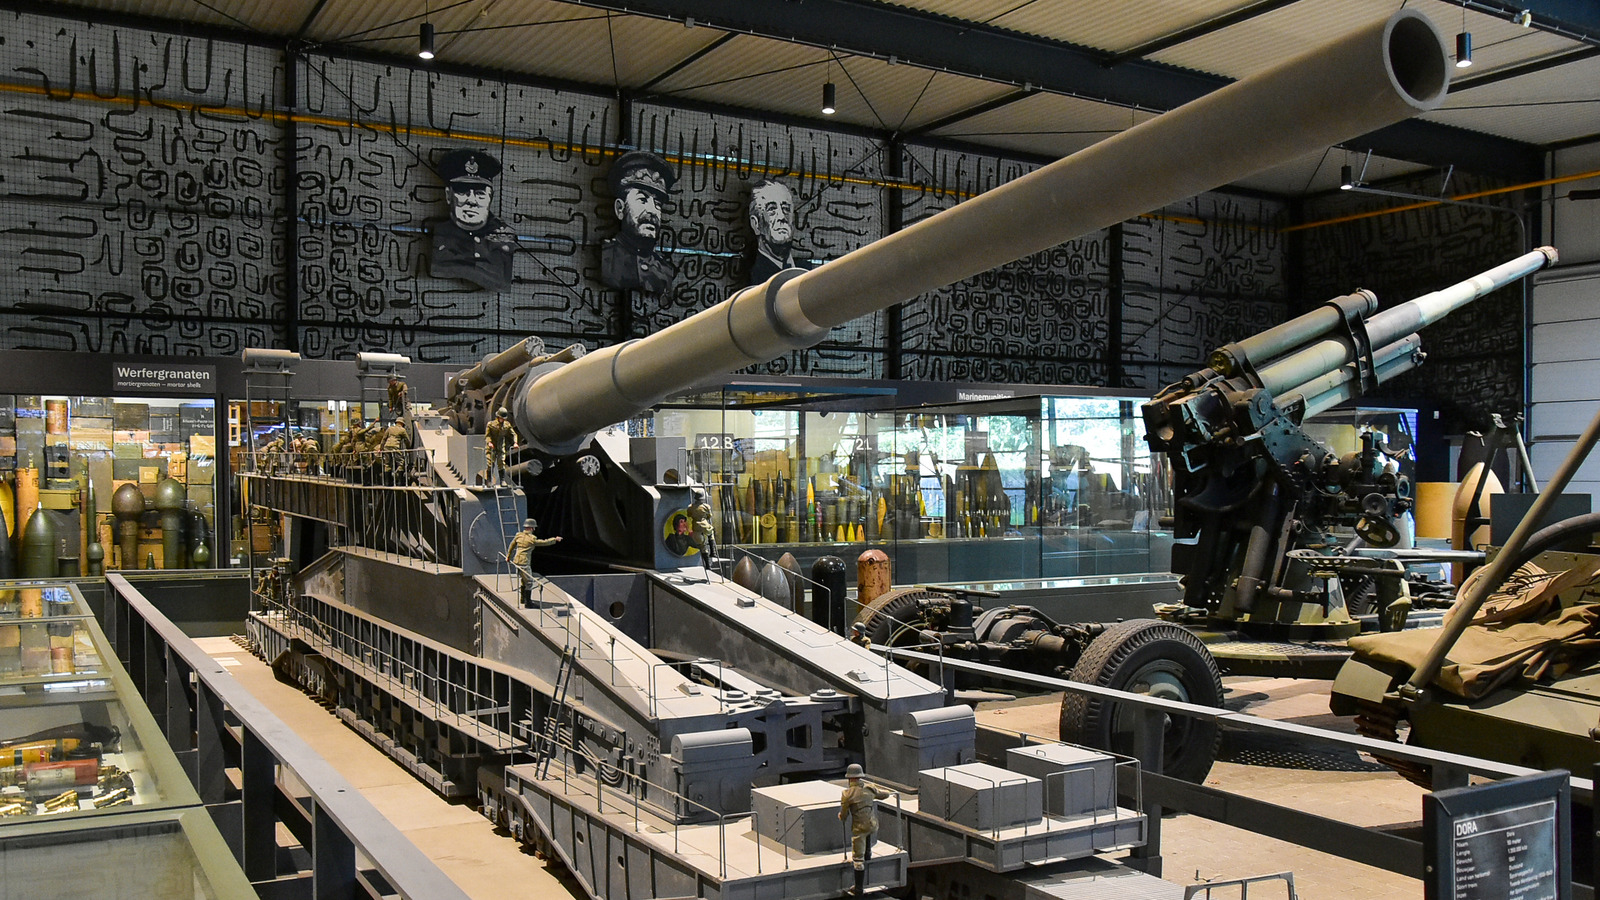 Schwerer Gustav: Hitler's Largest Piece of Artillery During World